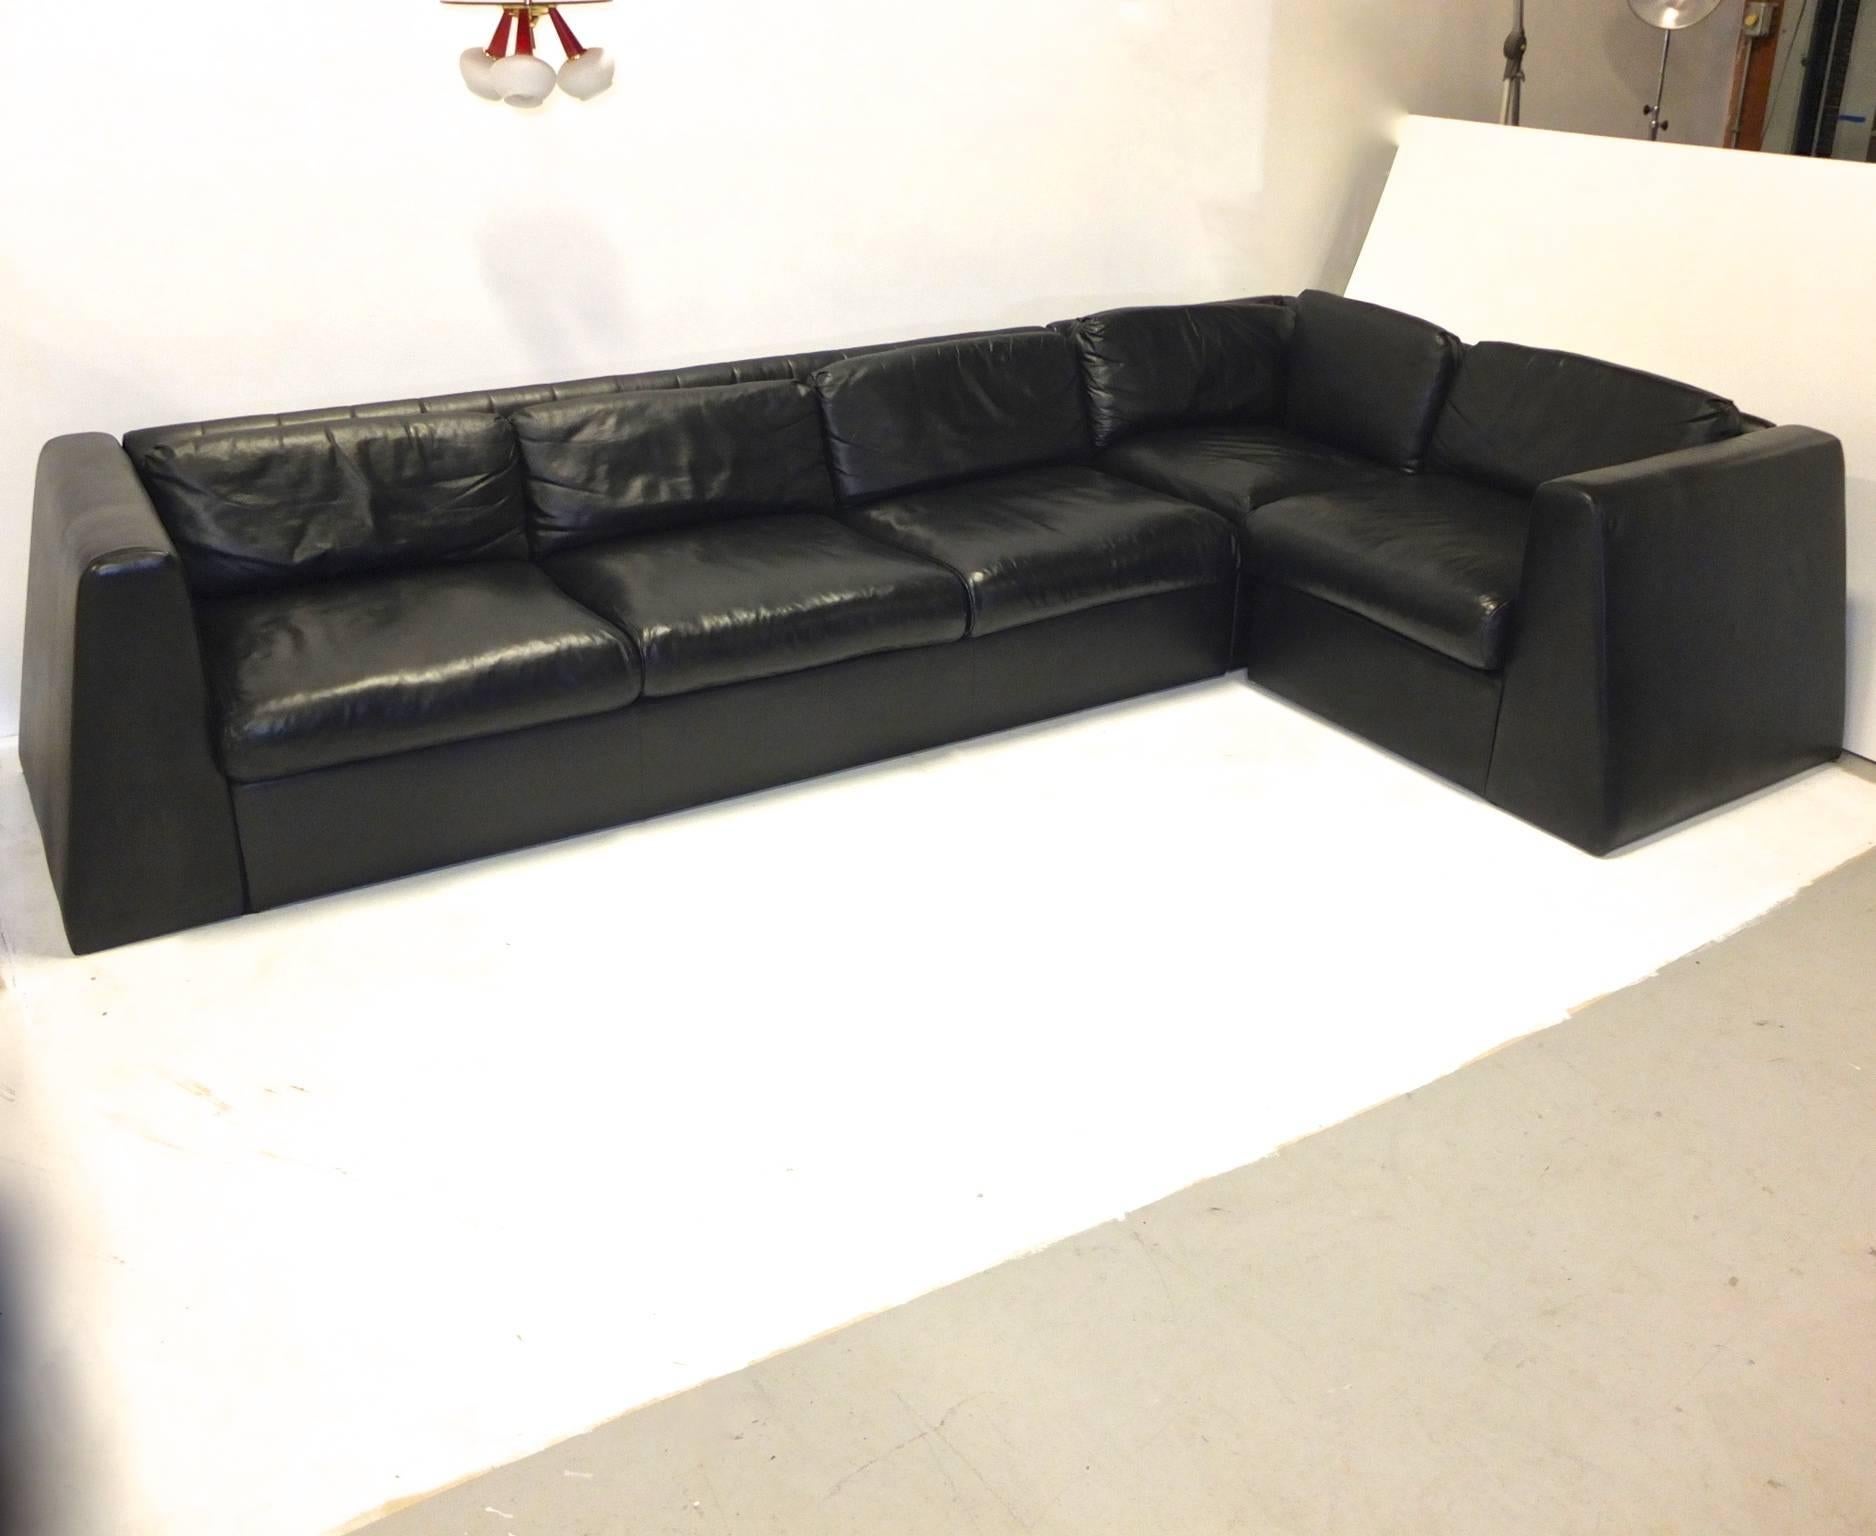 leather sectional sleeper sofa